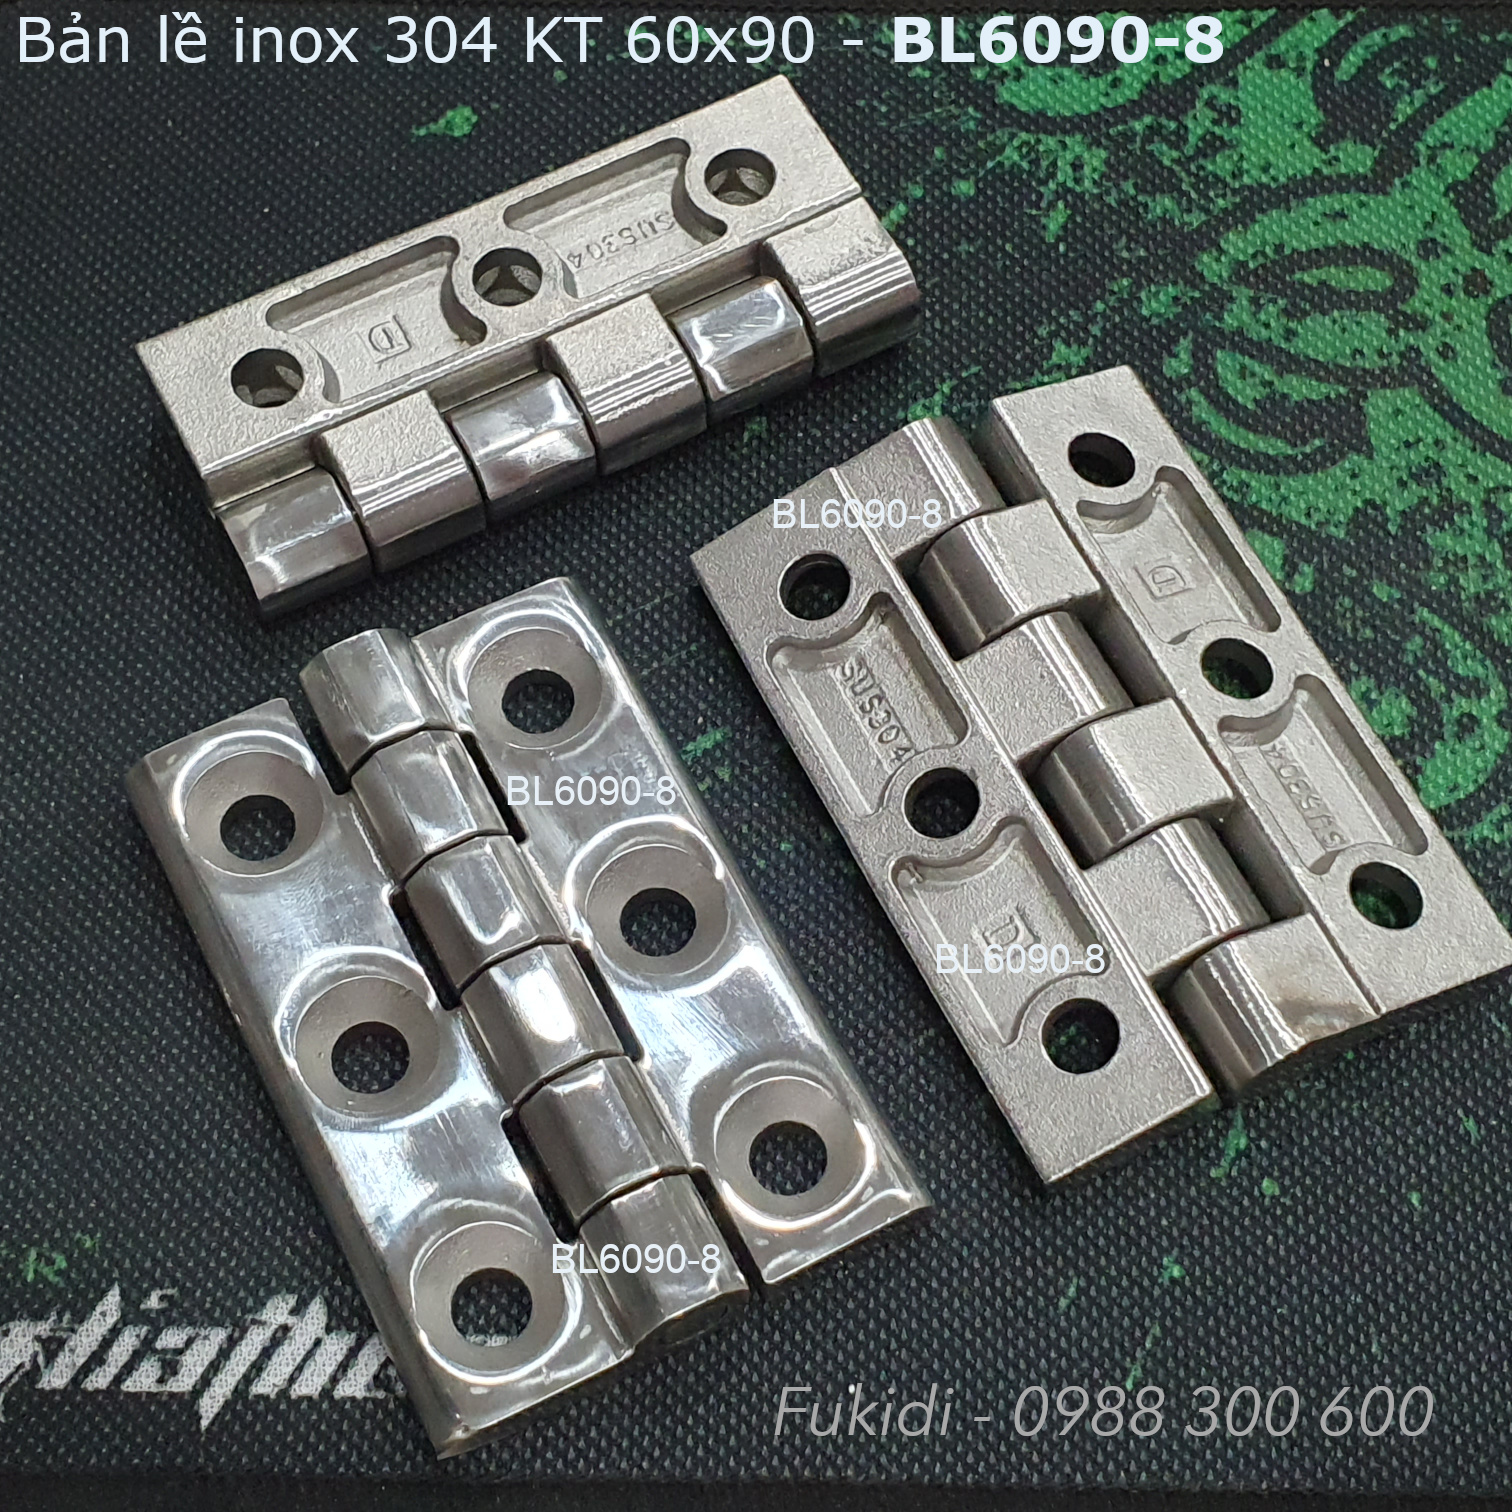 Bản lề inox 304, KT 60x90, dày 8mm - BL6090-8